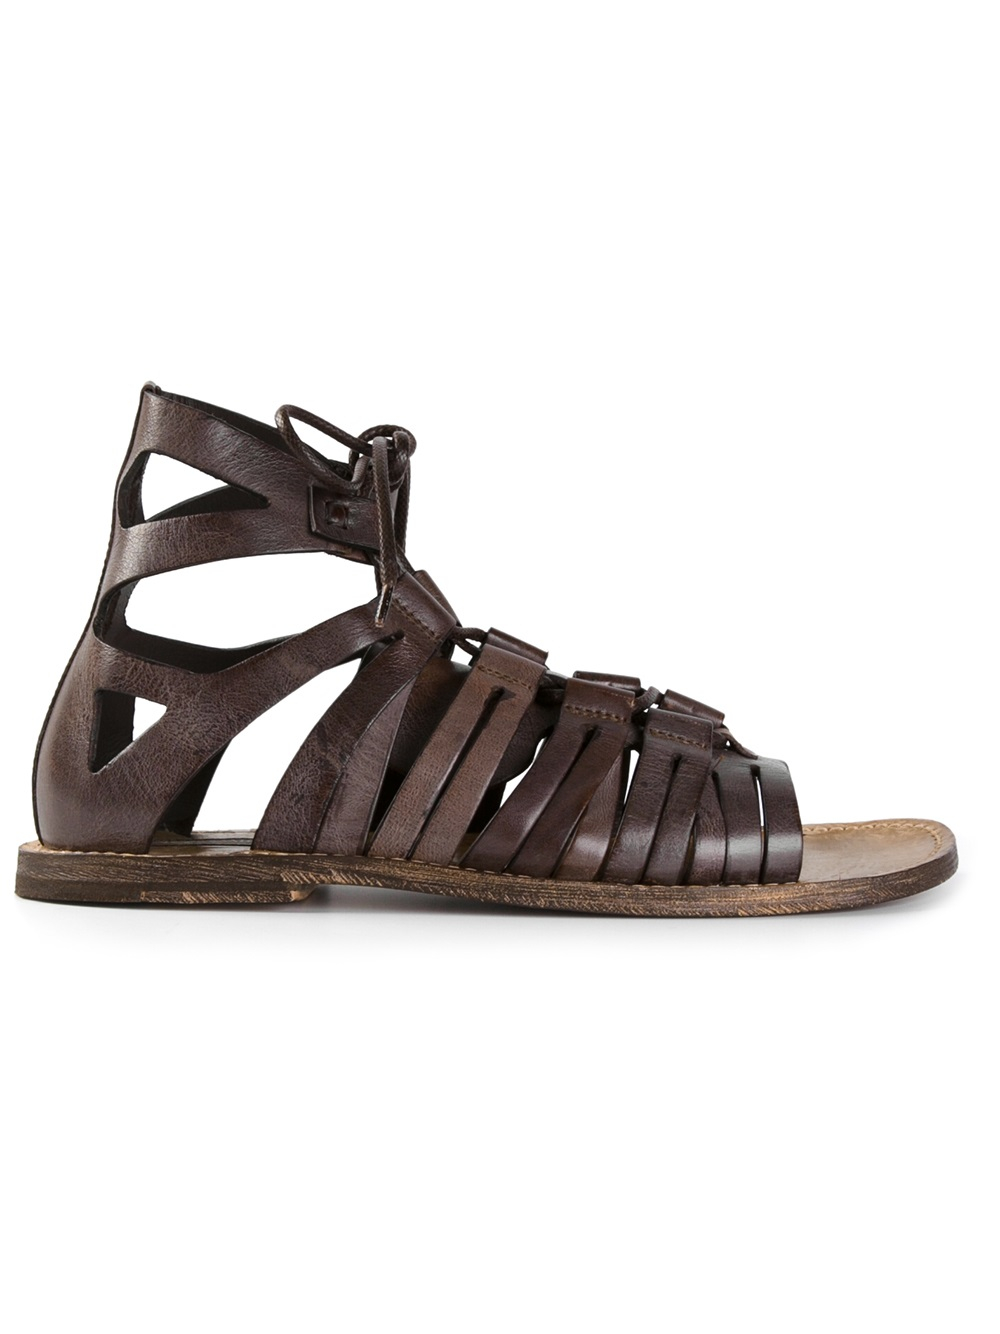 Dolce & Gabbana Gladiator Sandals in Brown for Men - Lyst